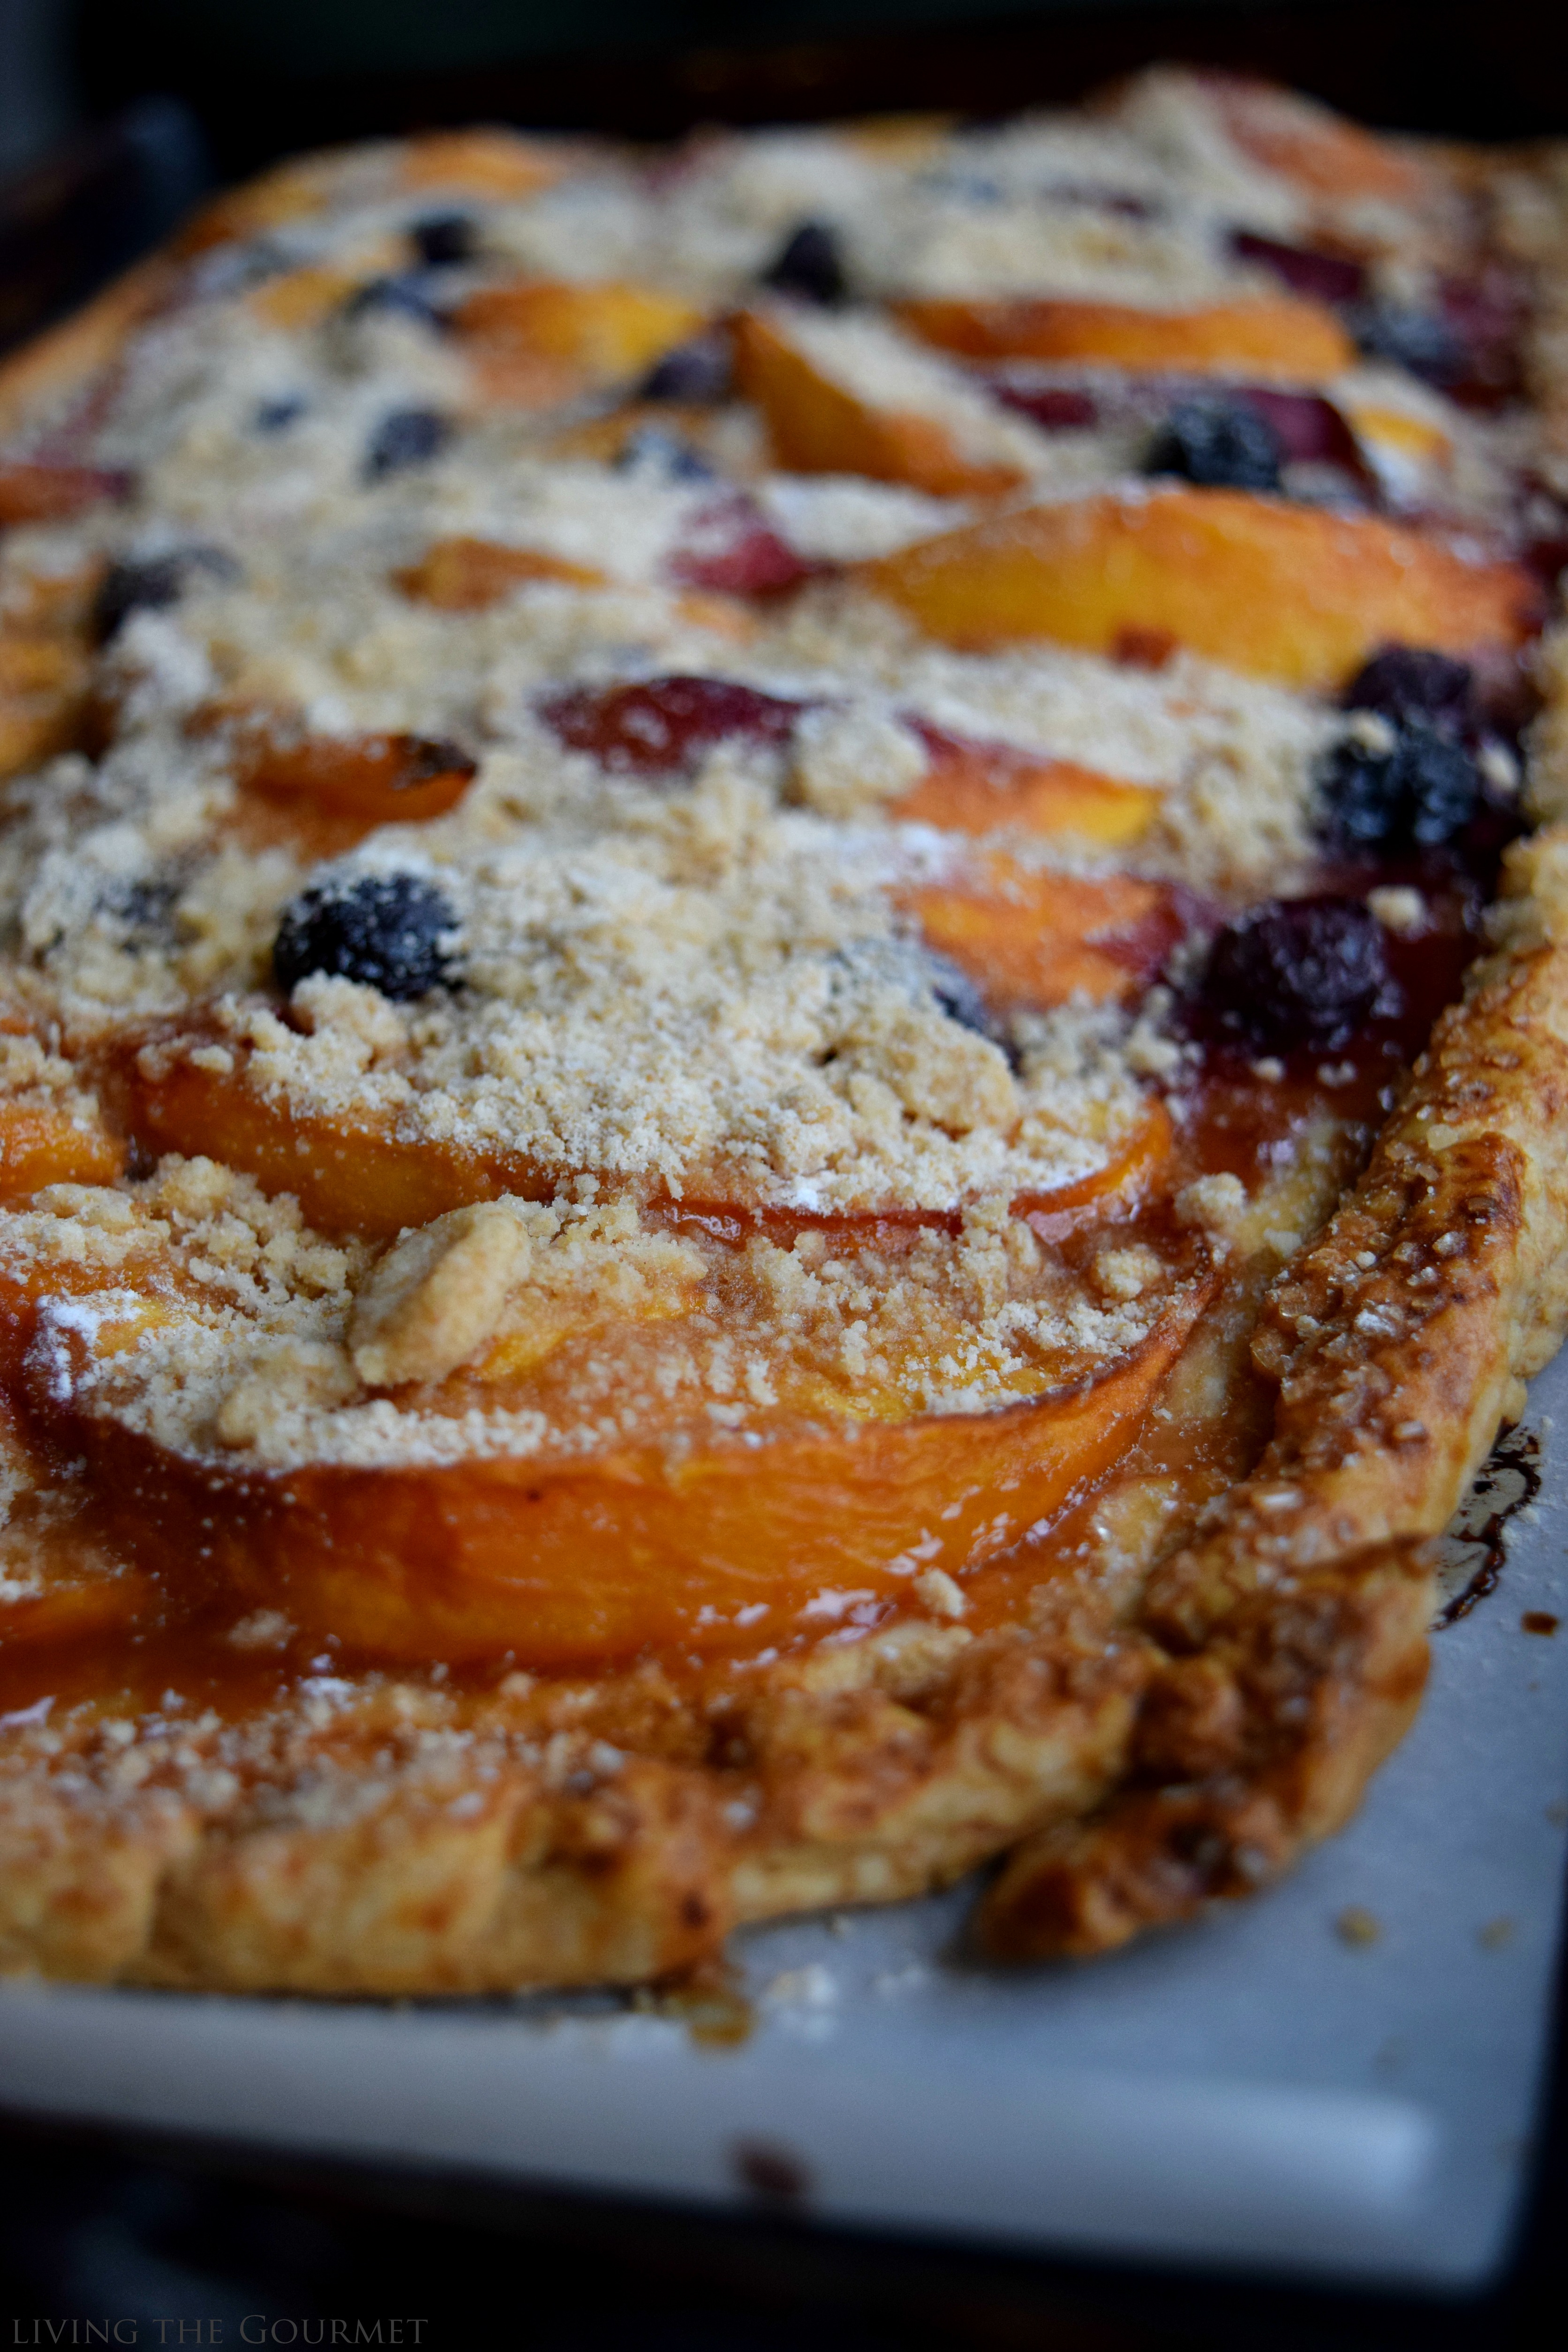 Living the Gourmet: Peach Slab Pie